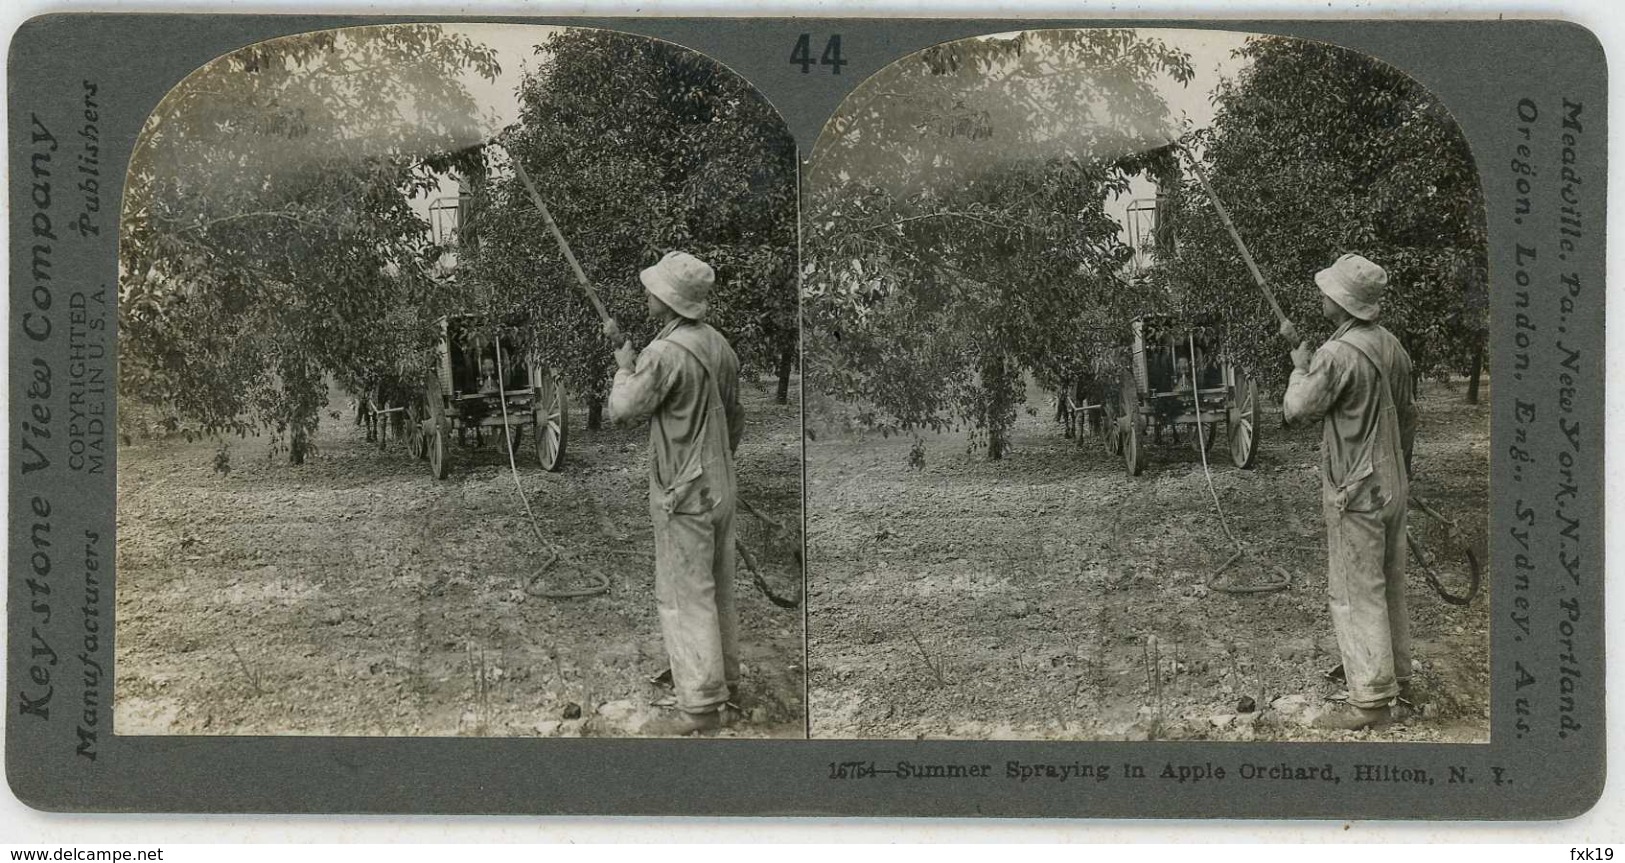 New York ~ HILTON ~ Spraying Apple Trees Stereoview 16754 Ve44d - Fotos Estereoscópicas